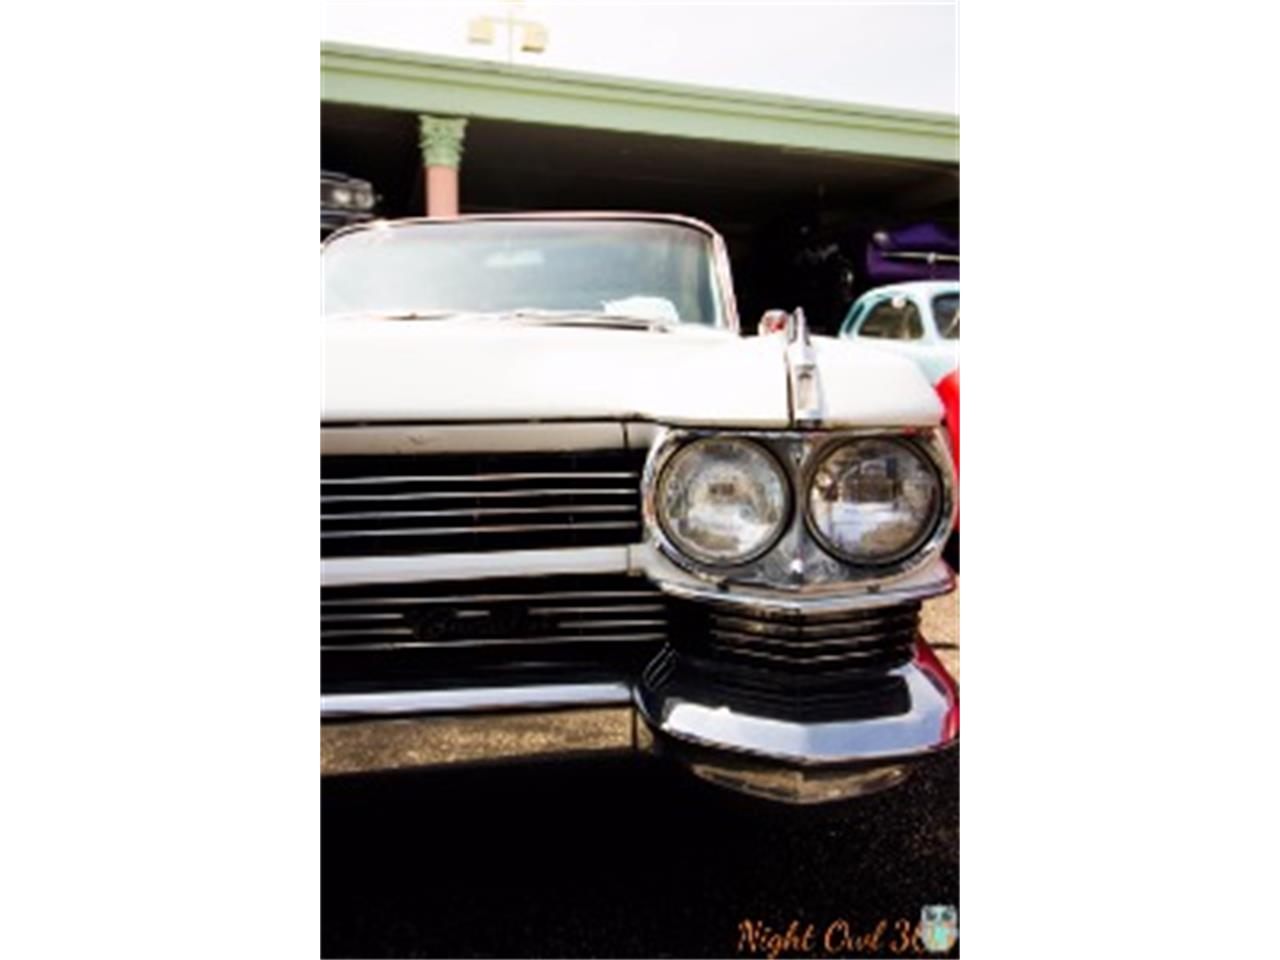 1964 Cadillac 4-Dr Sedan for sale in Miami, FL